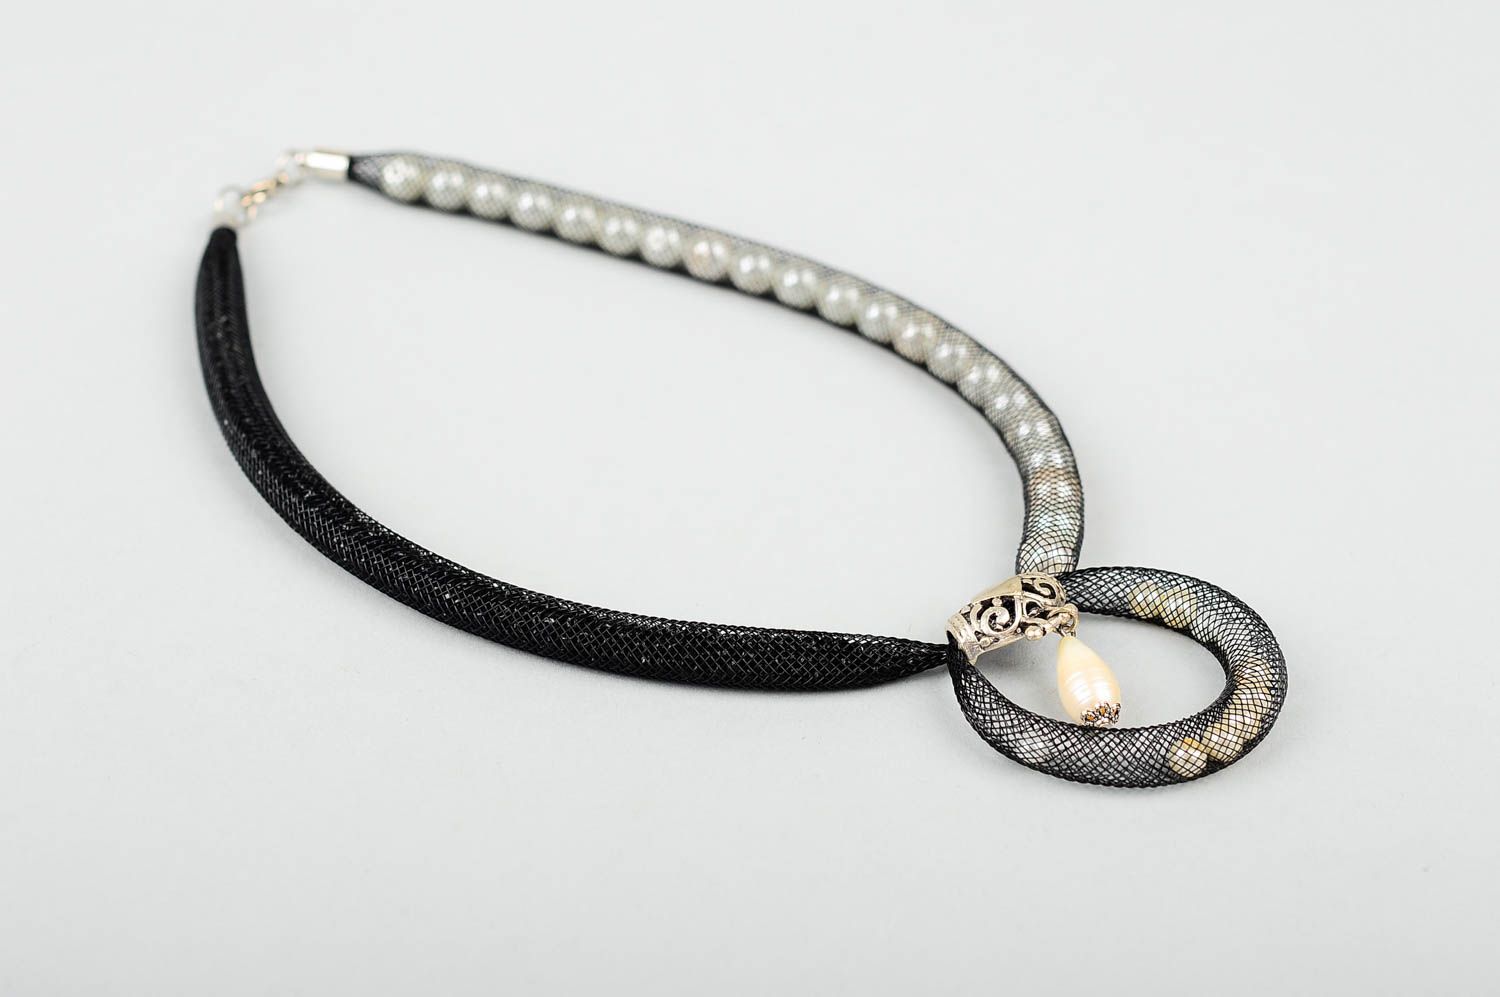 Stylish handmade beaded necklace artisan jewelry designs neck accessories photo 3